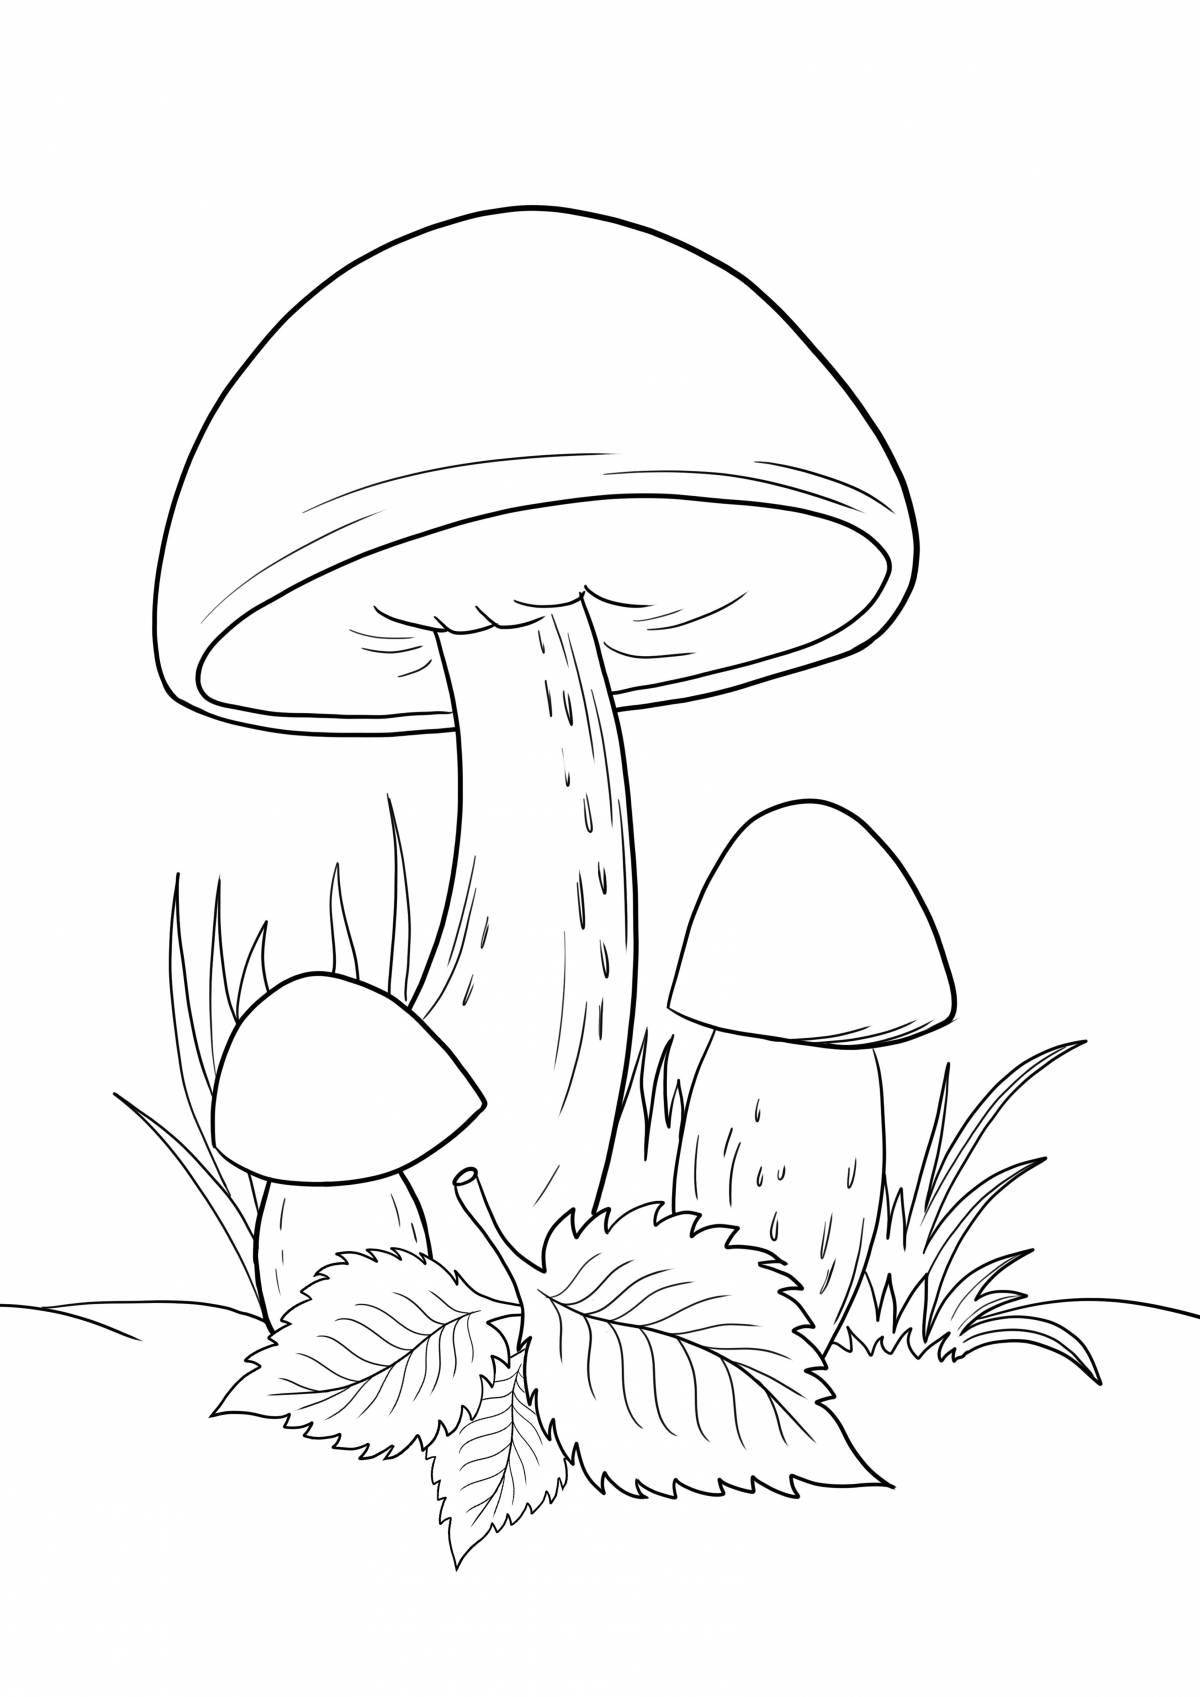 Coloring book joyful mushroom for children 6-7 years old